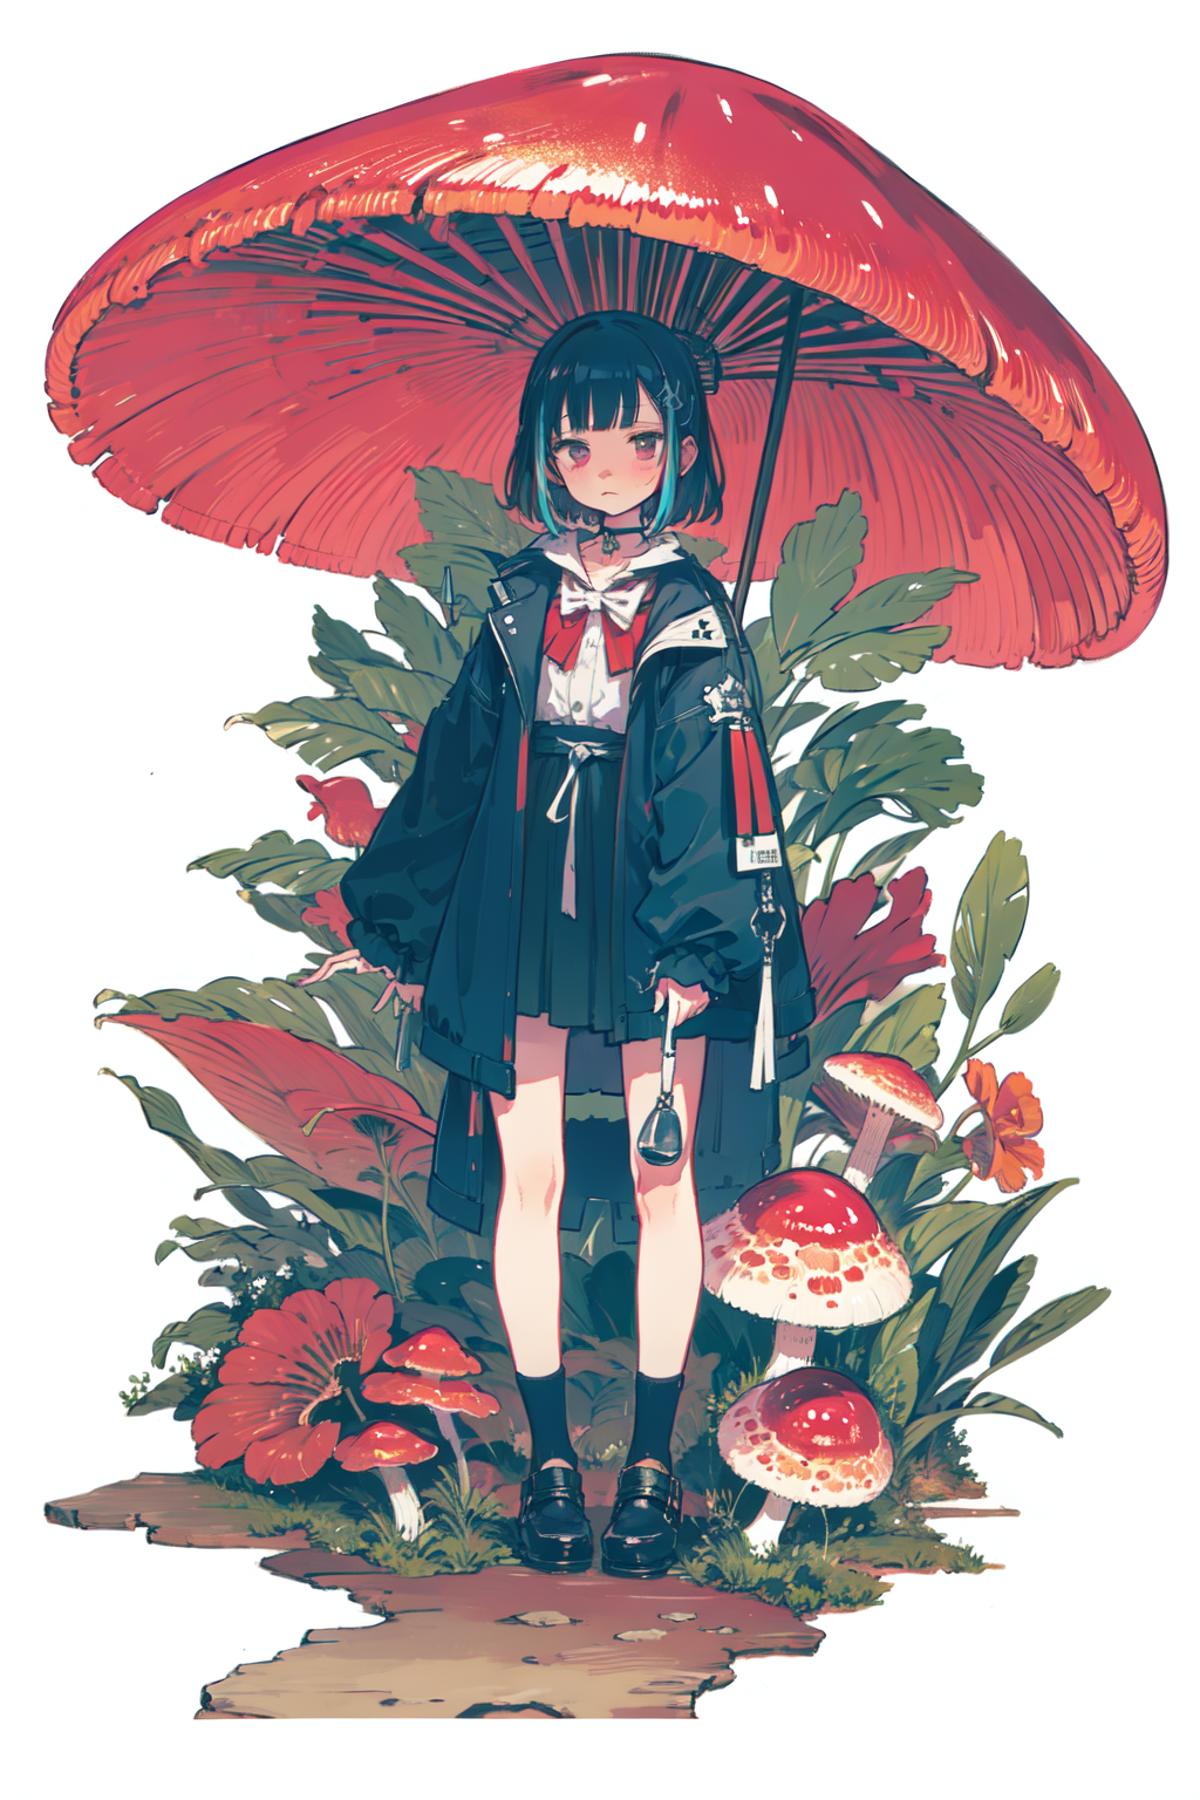 Mushroom Girl/蘑菇娘设计 image by Junbegun